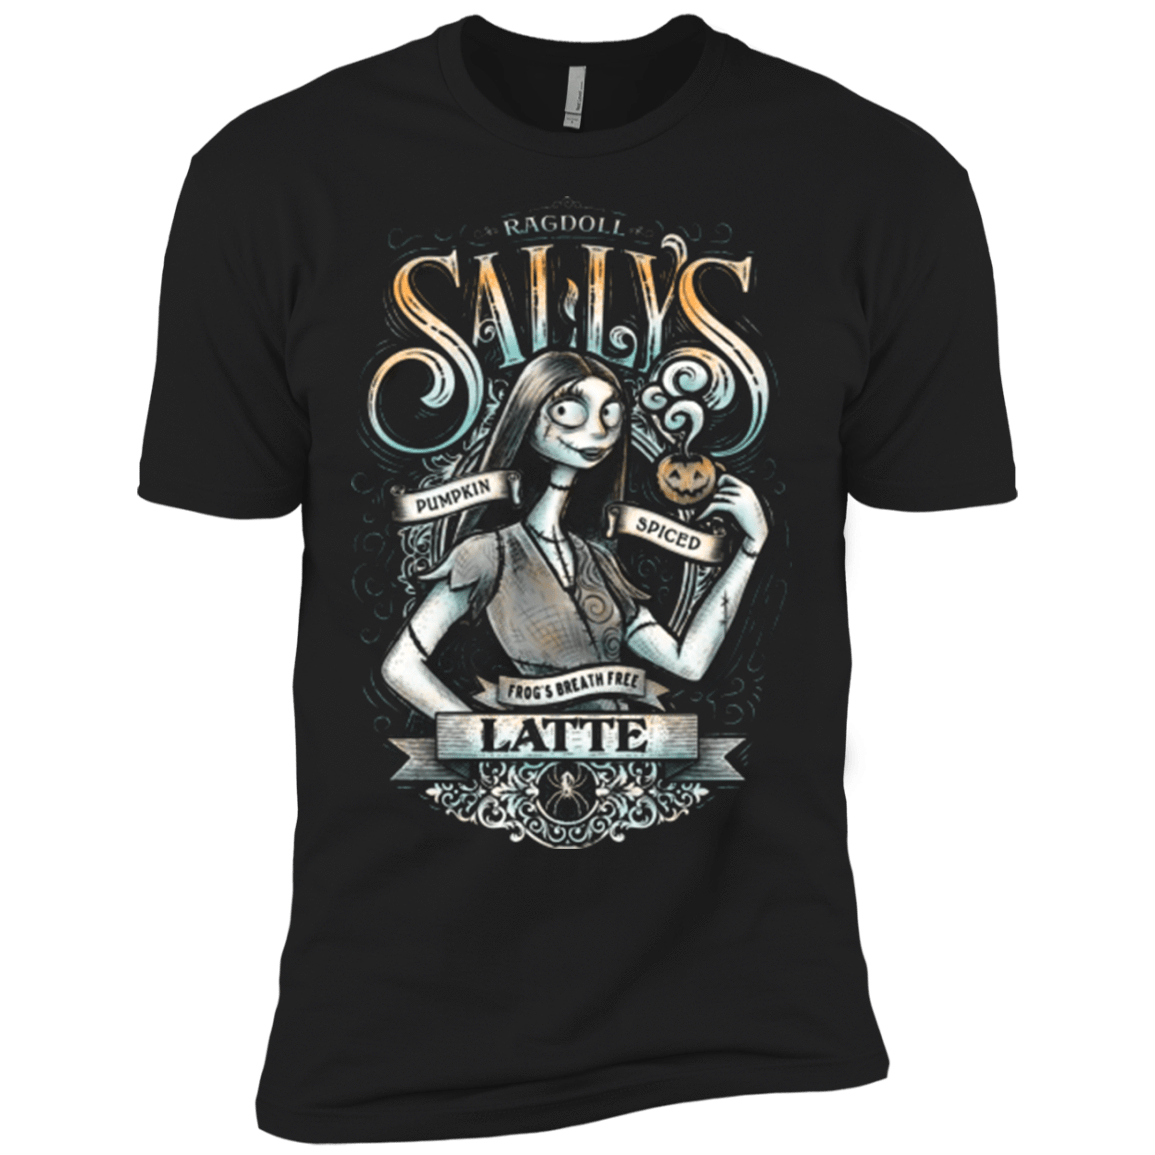 T-Shirts Black / X-Small SALLYS LATTE Men's Premium T-Shirt